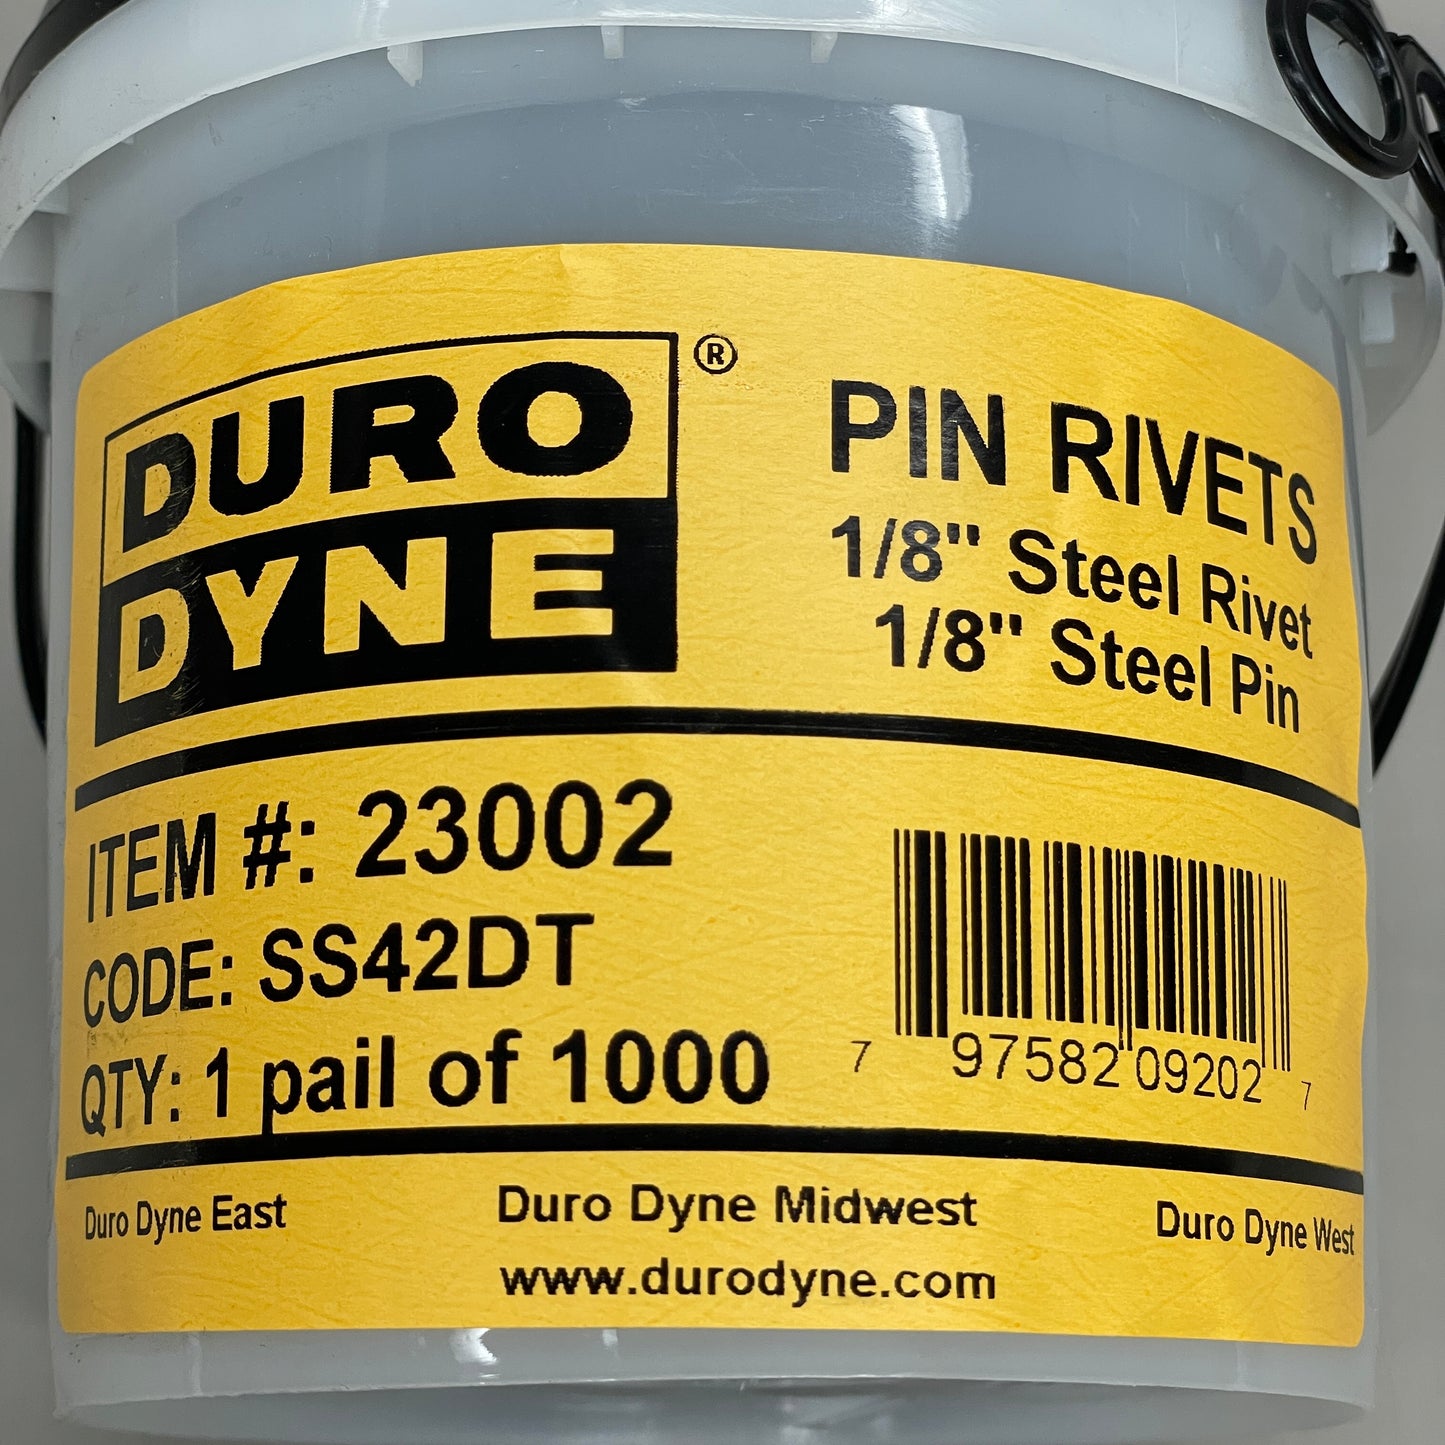 DURO DYNE 42D 1/8" Steel Pin Rivets 1000pcs SS42DT 23002 (new)